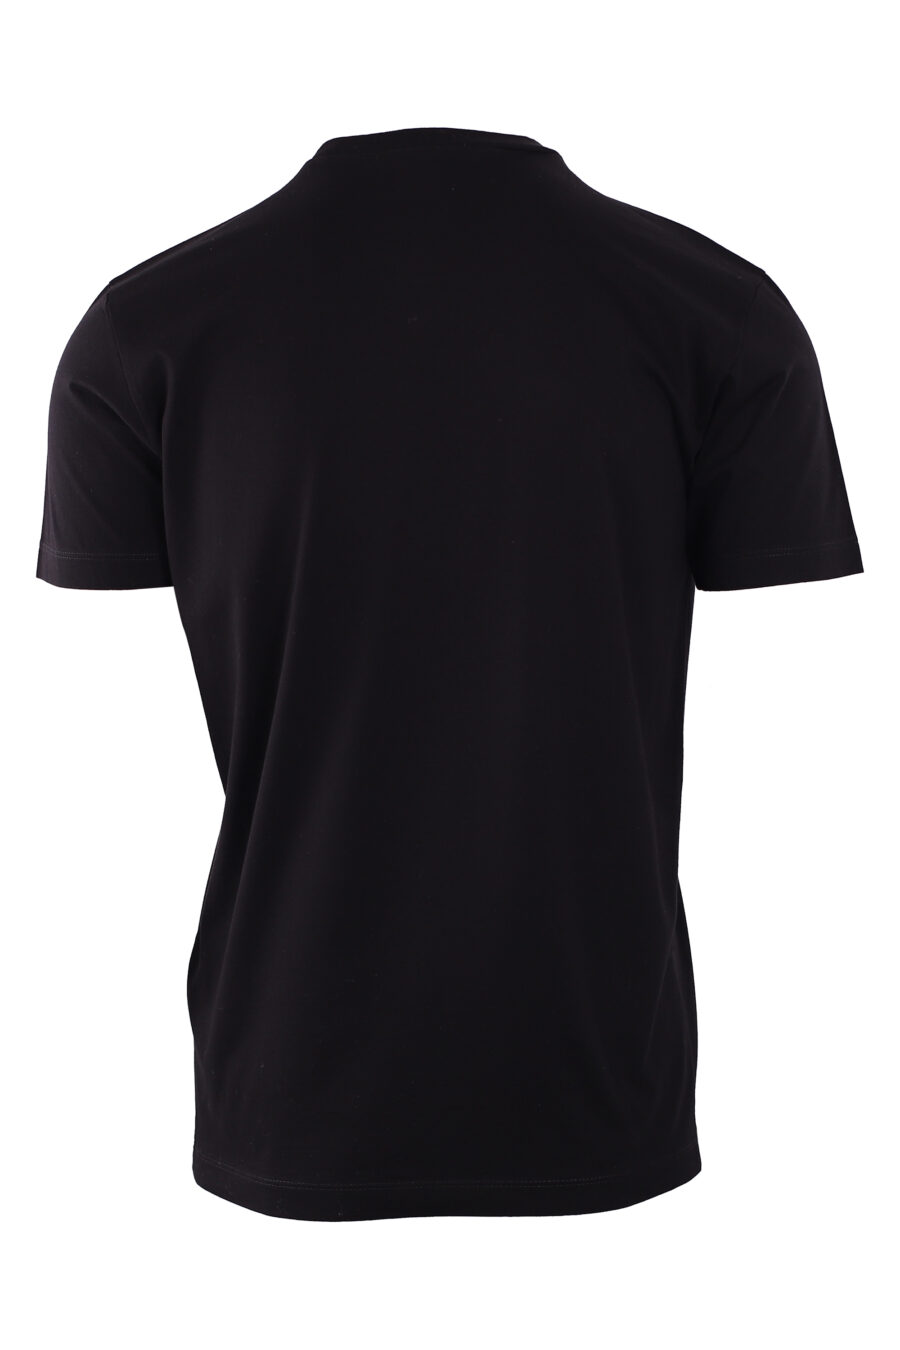 Black T-shirt with white square "D2" logo - IMG 2900